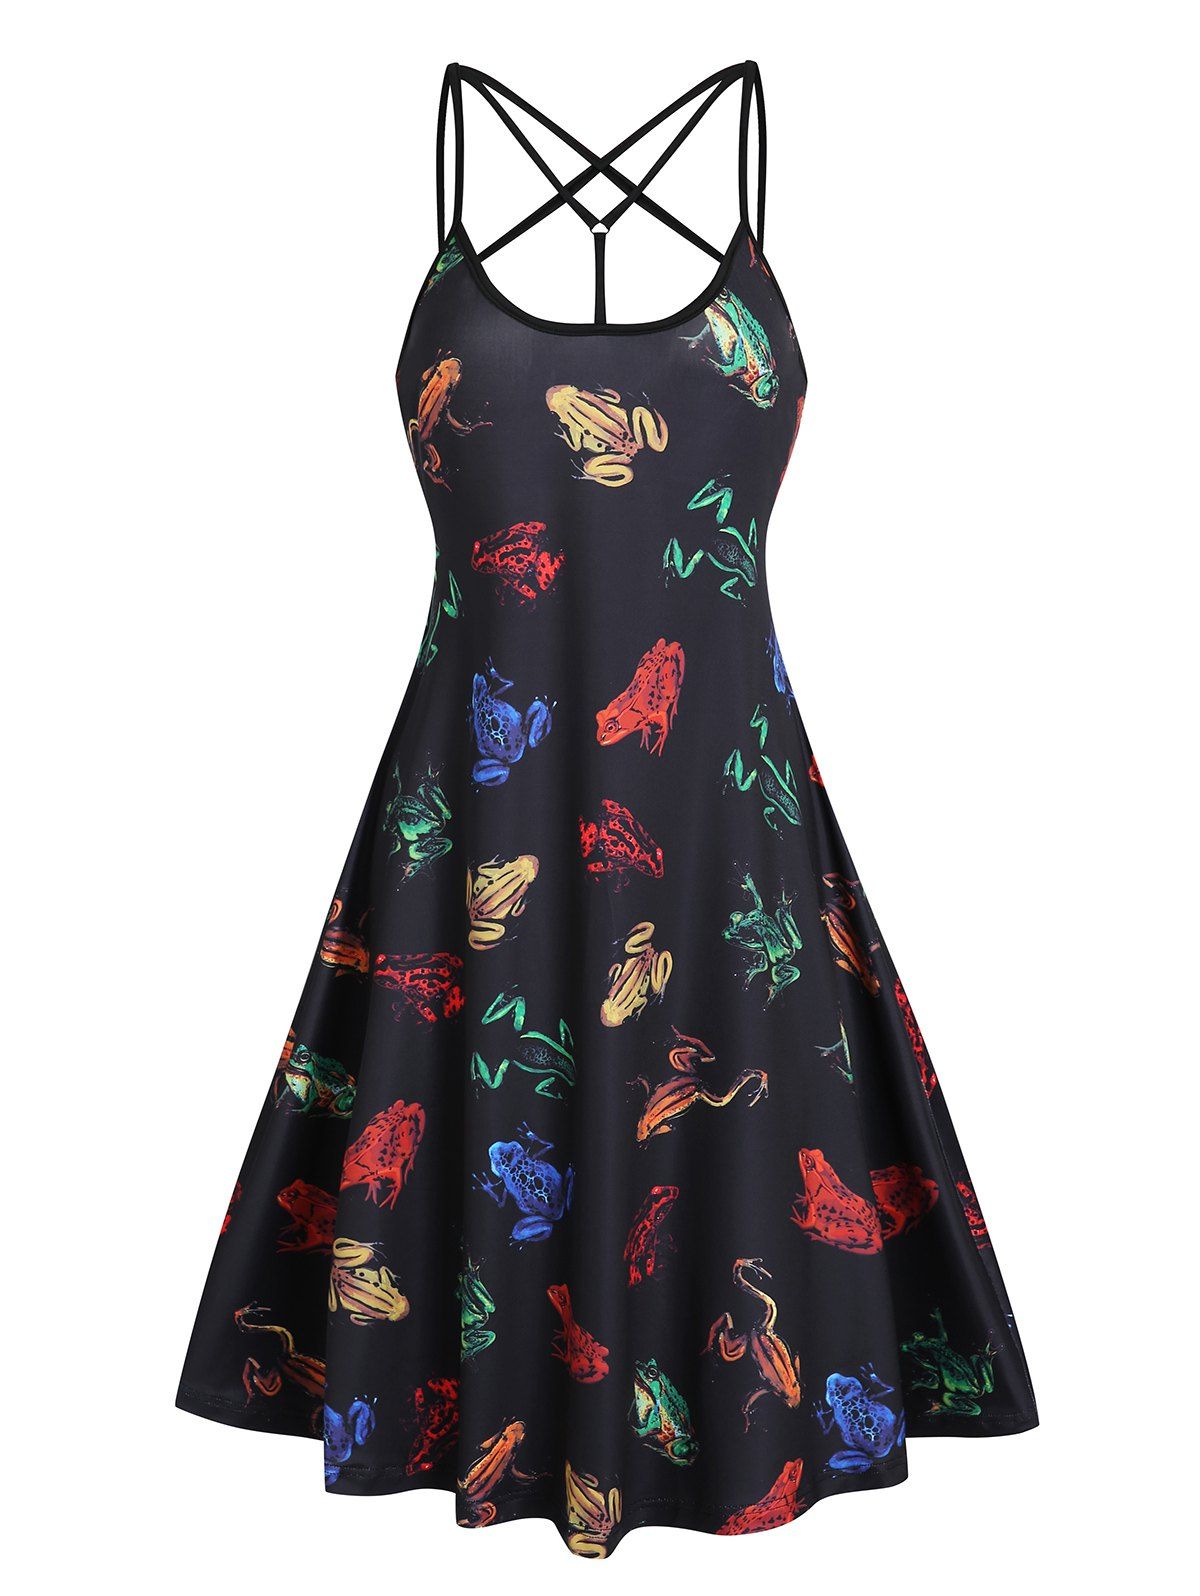 Allover 3D Frog Print Criss Cross Cami A Line Dress - BLACK XXXL